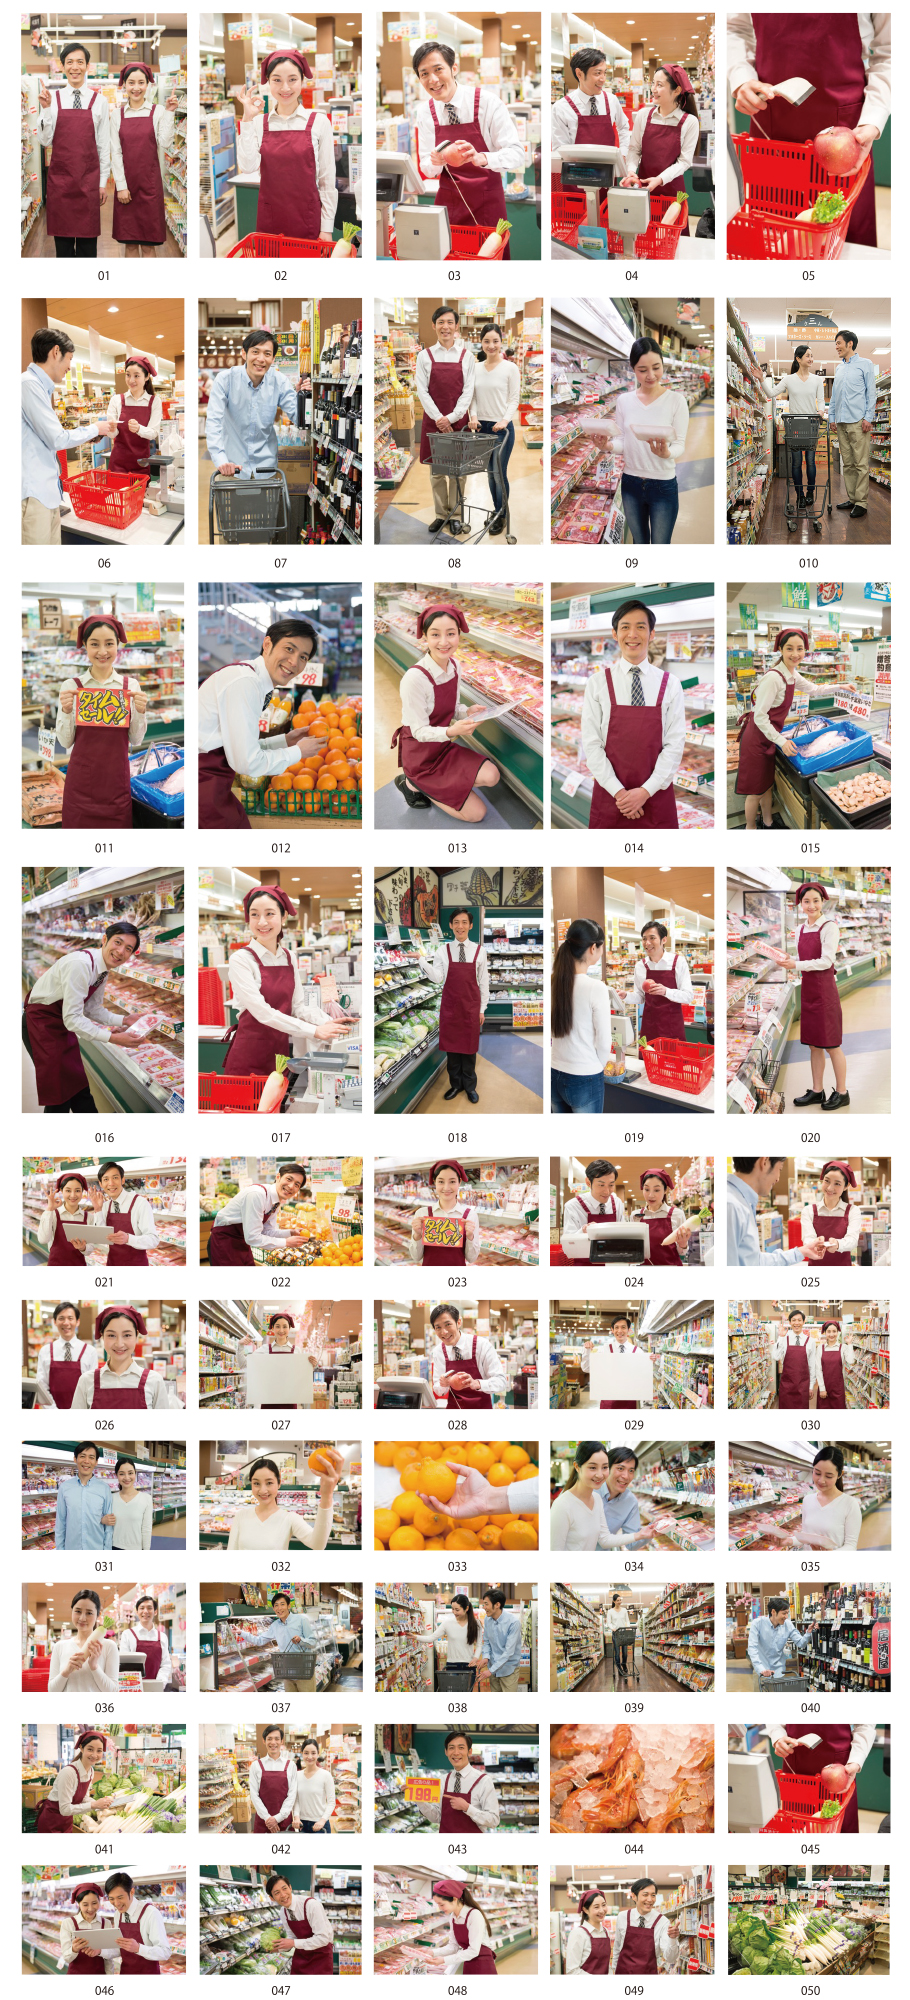 Supermarket photos vol.1 